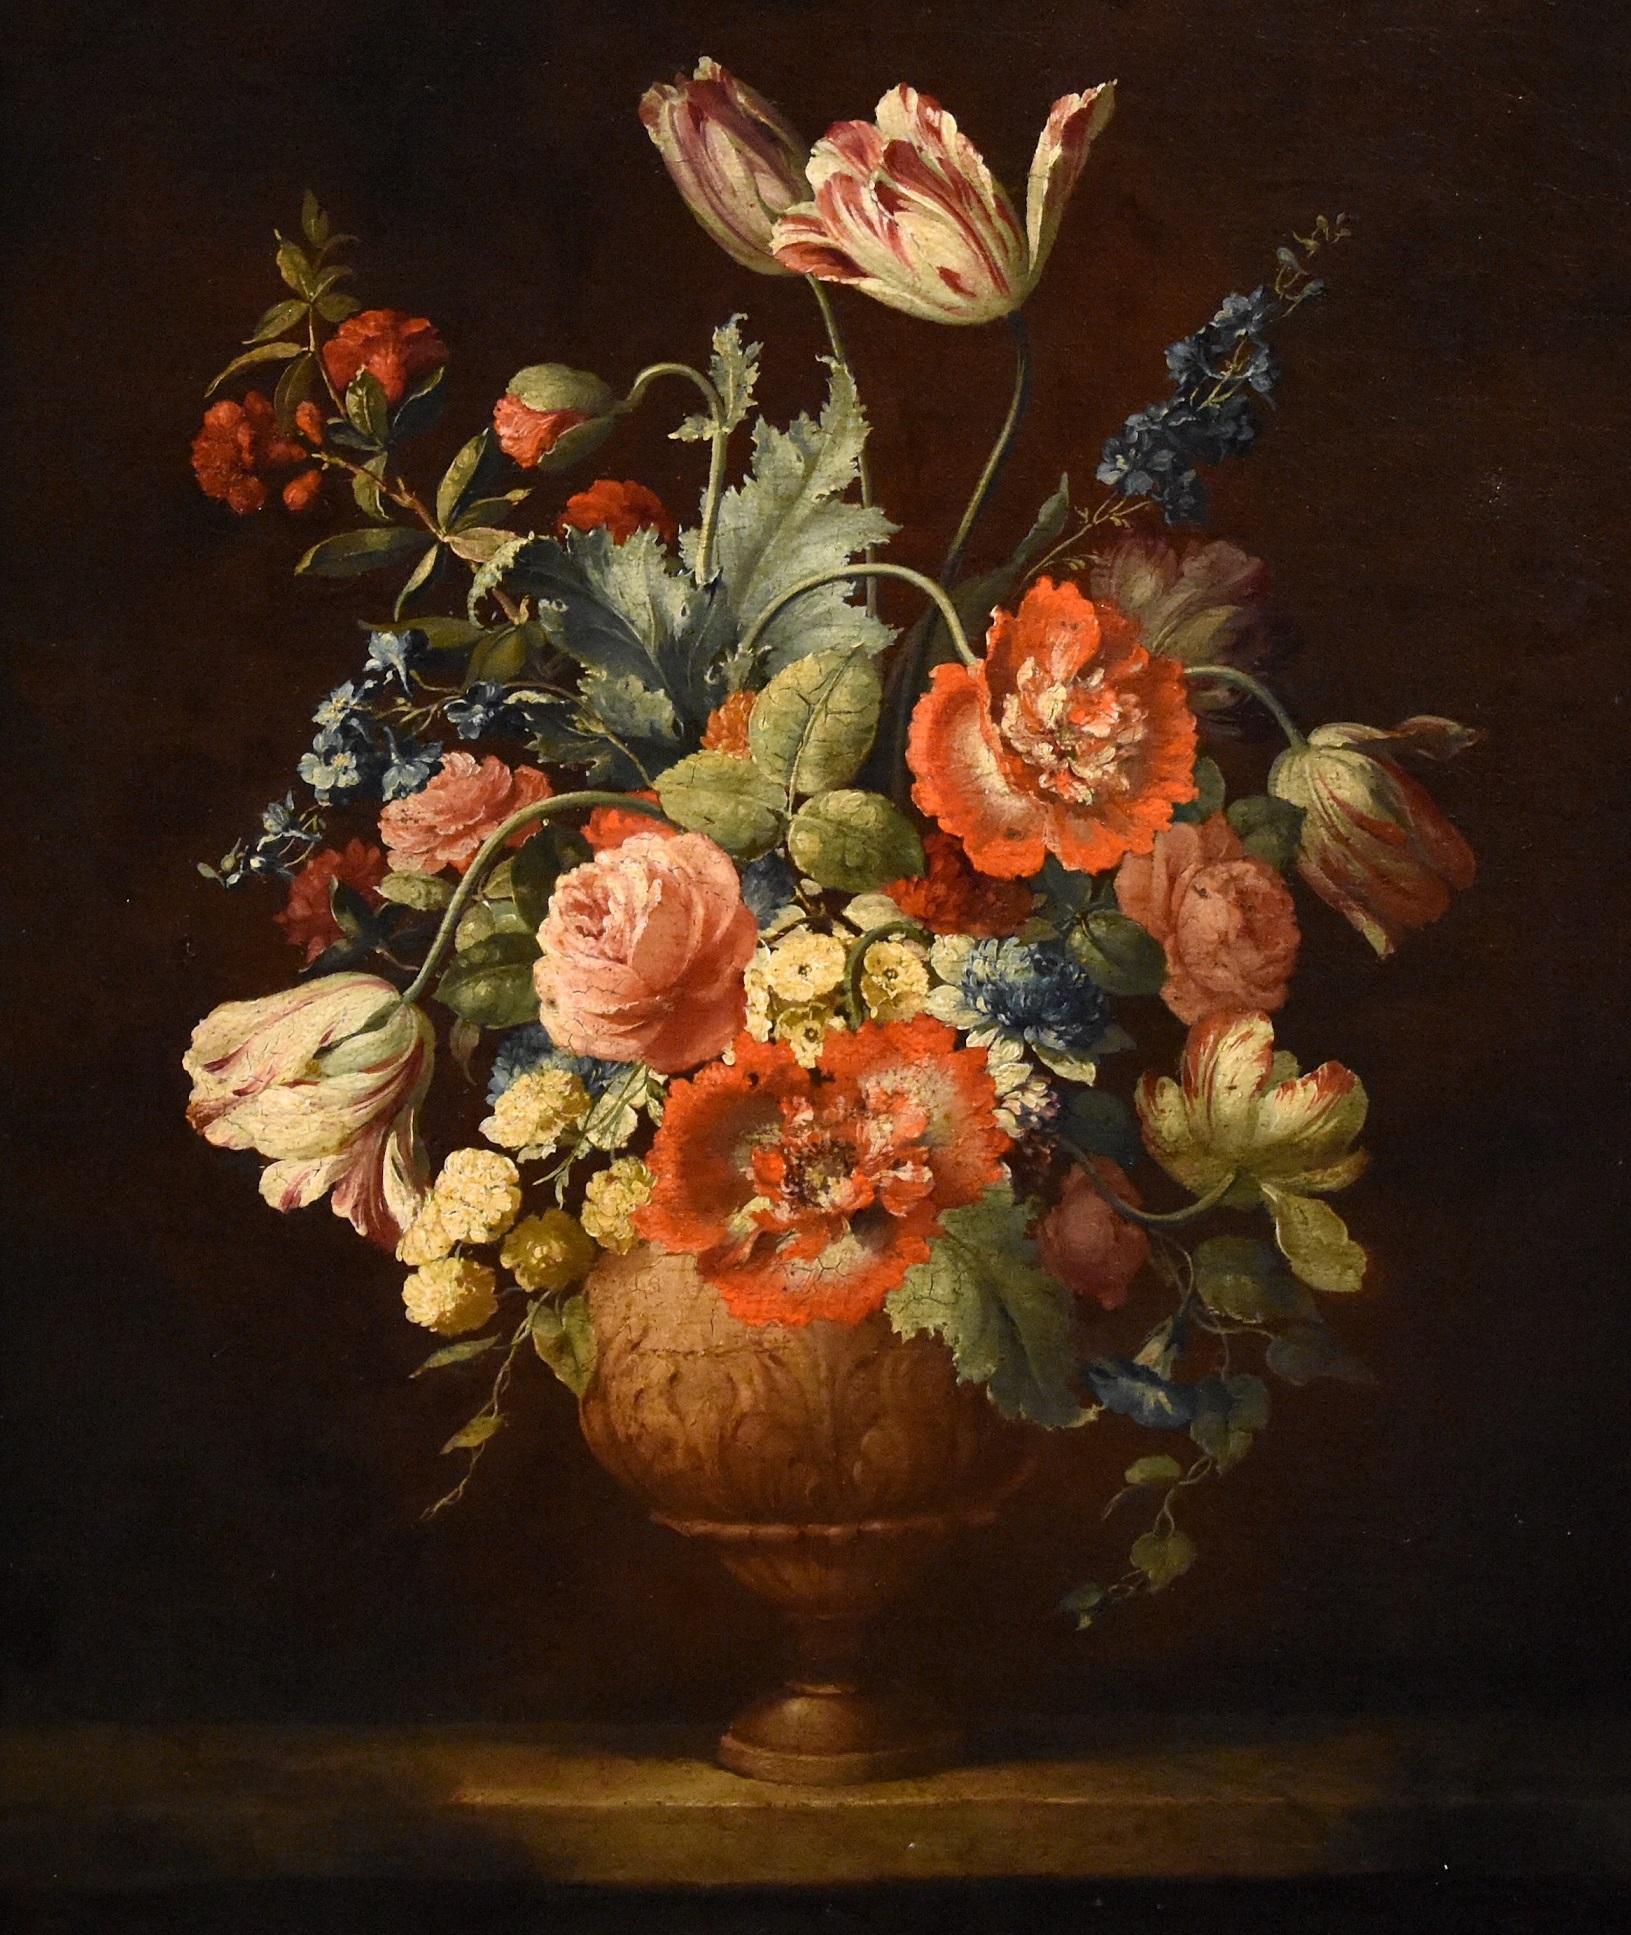 Still Life Flowers Van Huysum Paint Oil on canvas 18th Century Old master - Painting by Jacob van Huysum (Amsterdam, 1687 - London, 1746)